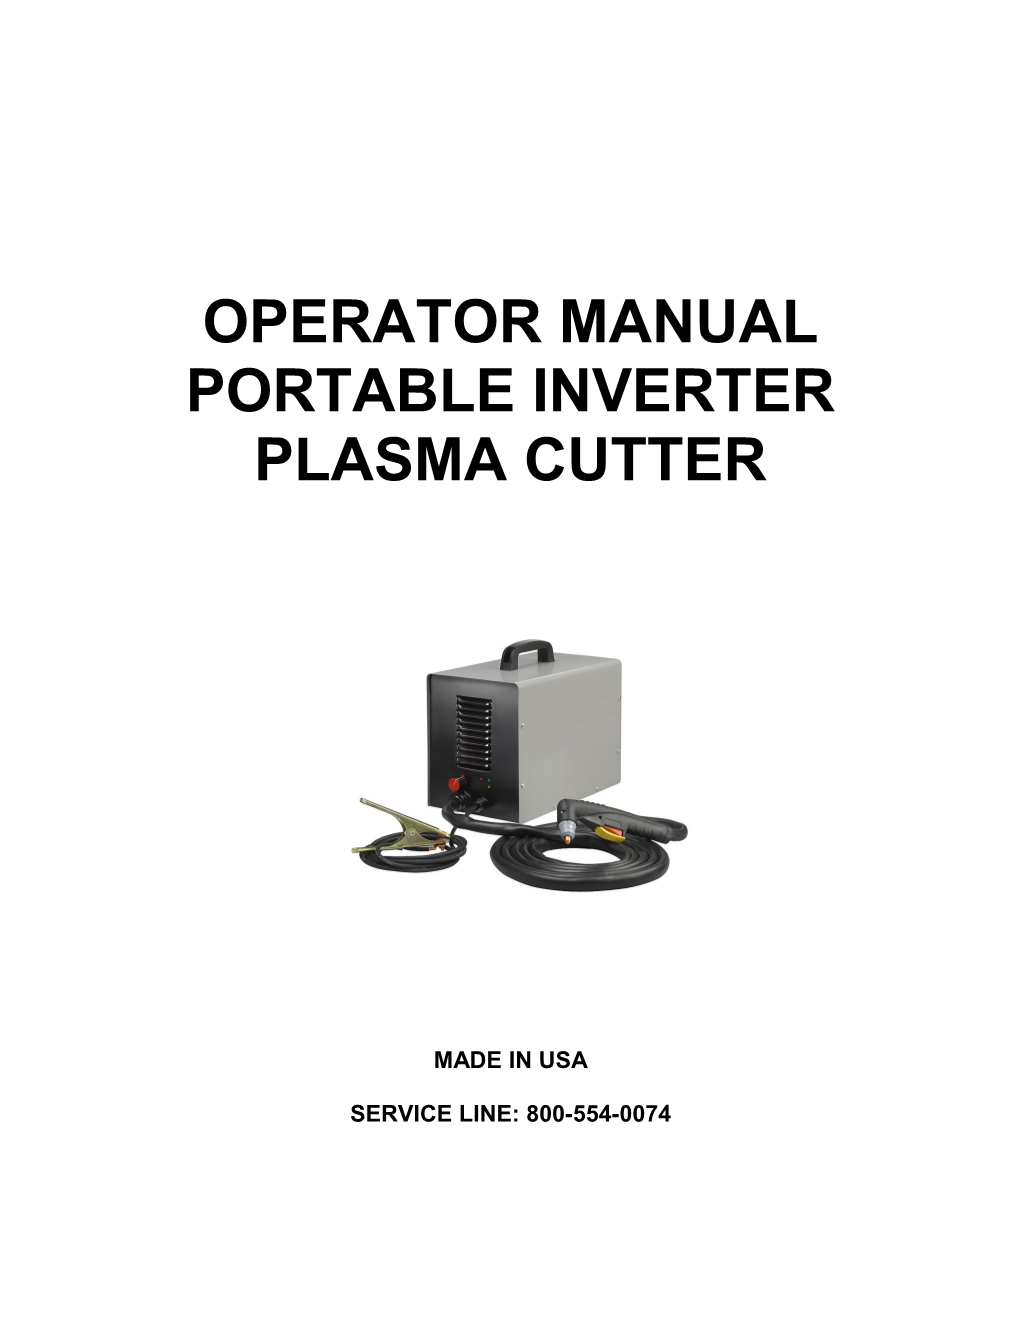 Portable Inverter Plasma Cutter